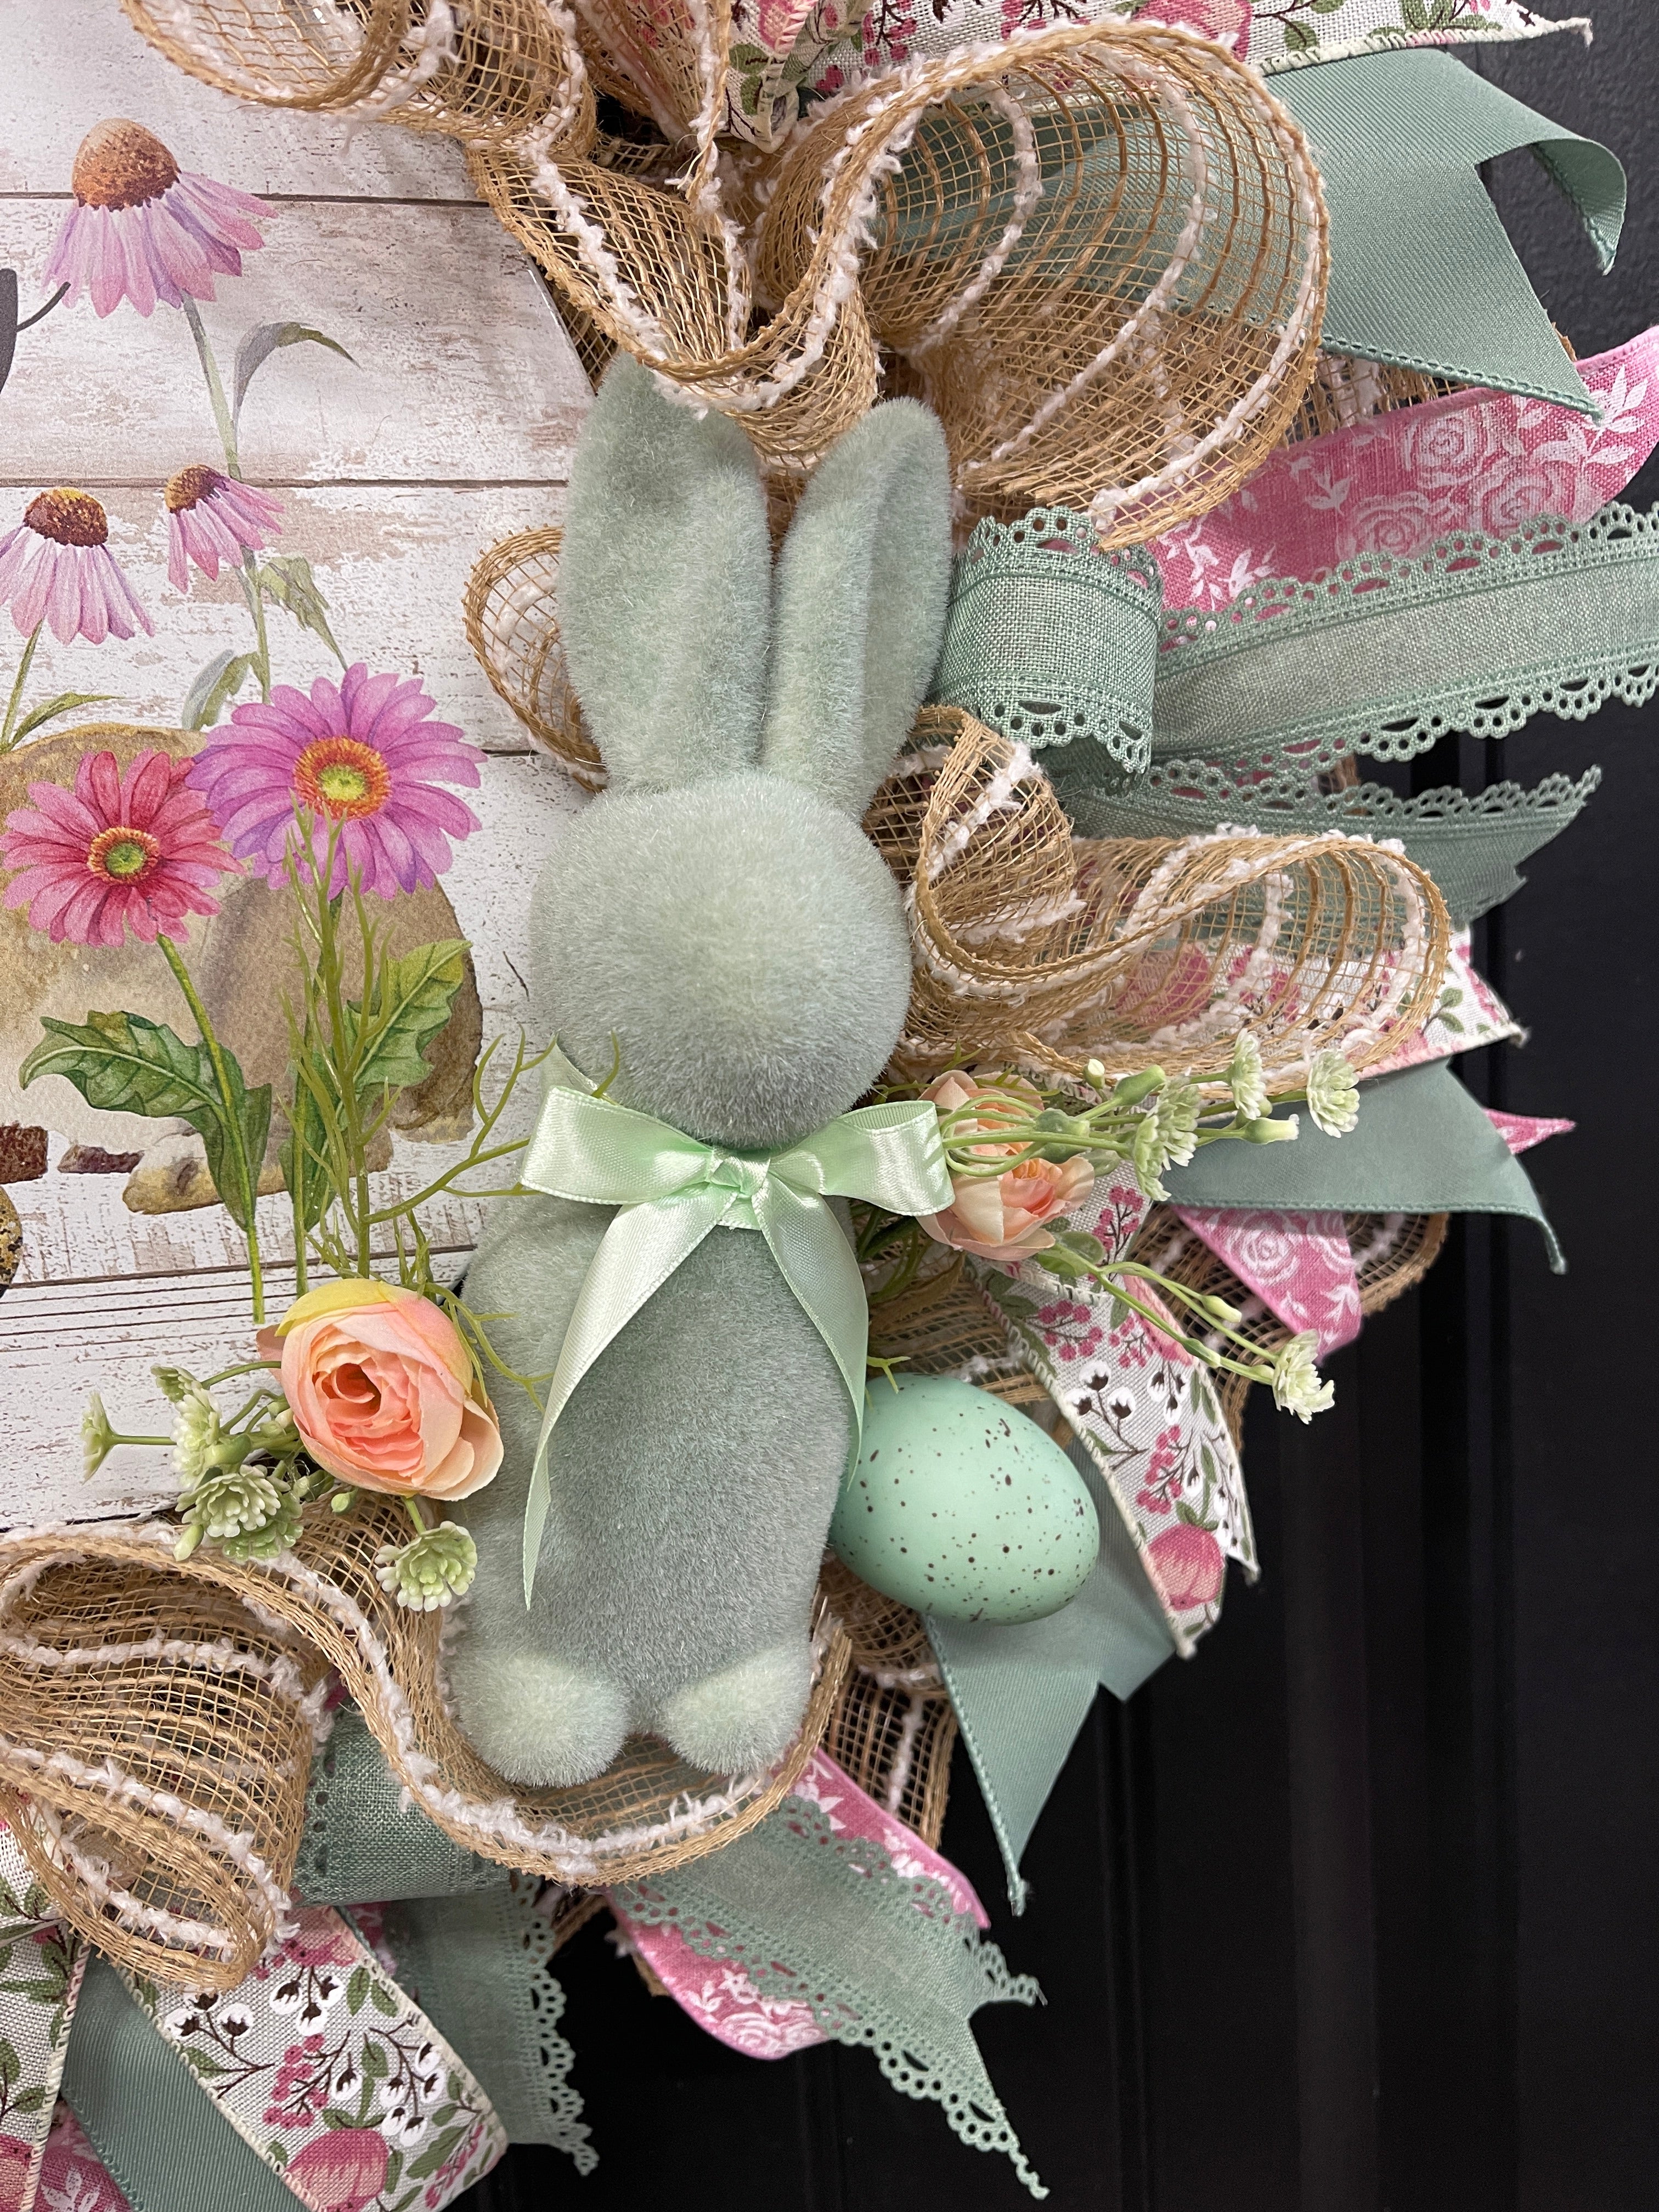 Welcome Spring Watercolor Bunnies Wreath